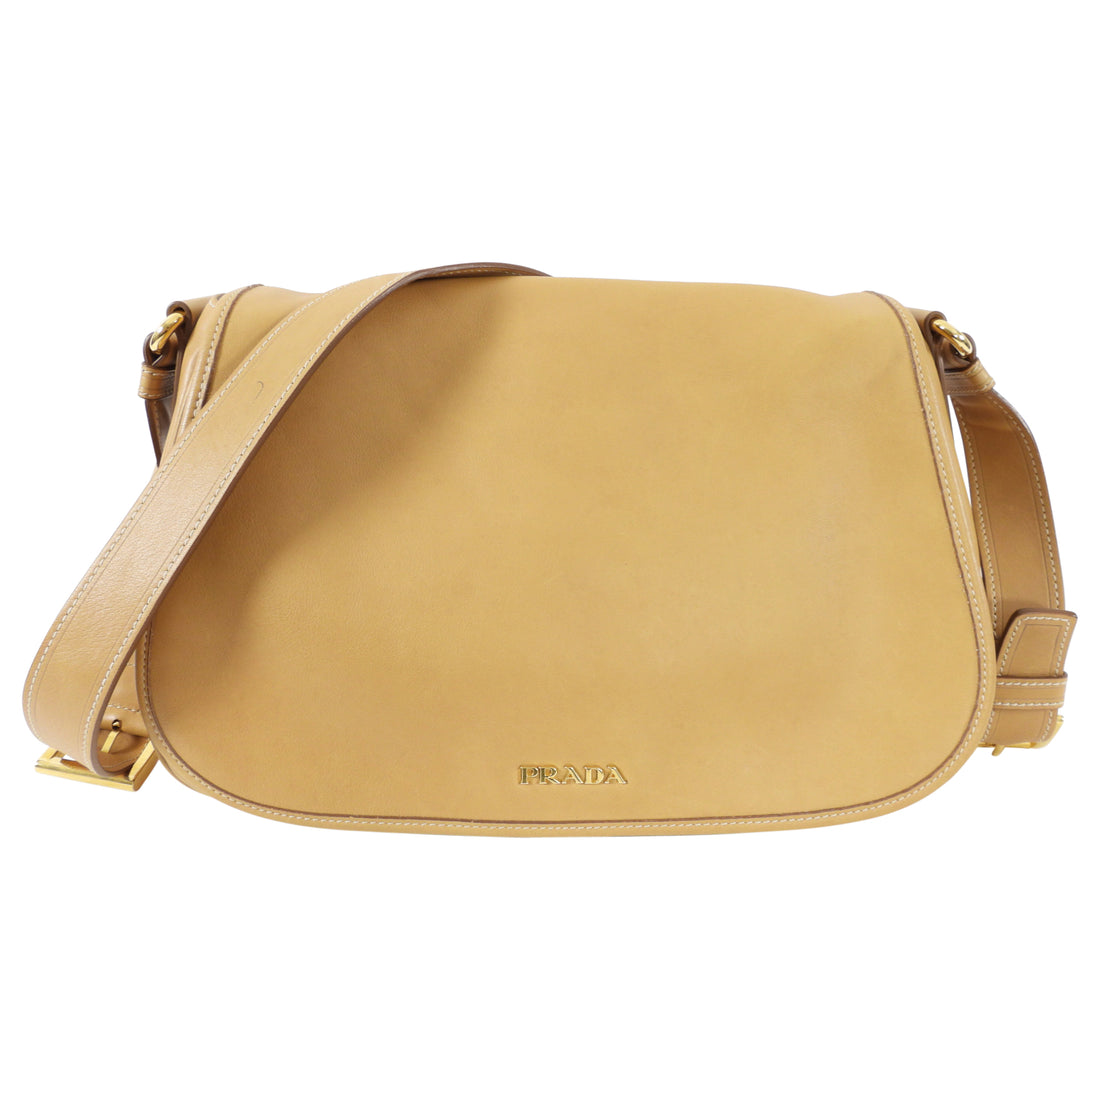 Prada Light Tan Leather Crossbody Messenger Bag – I MISS YOU VINTAGE